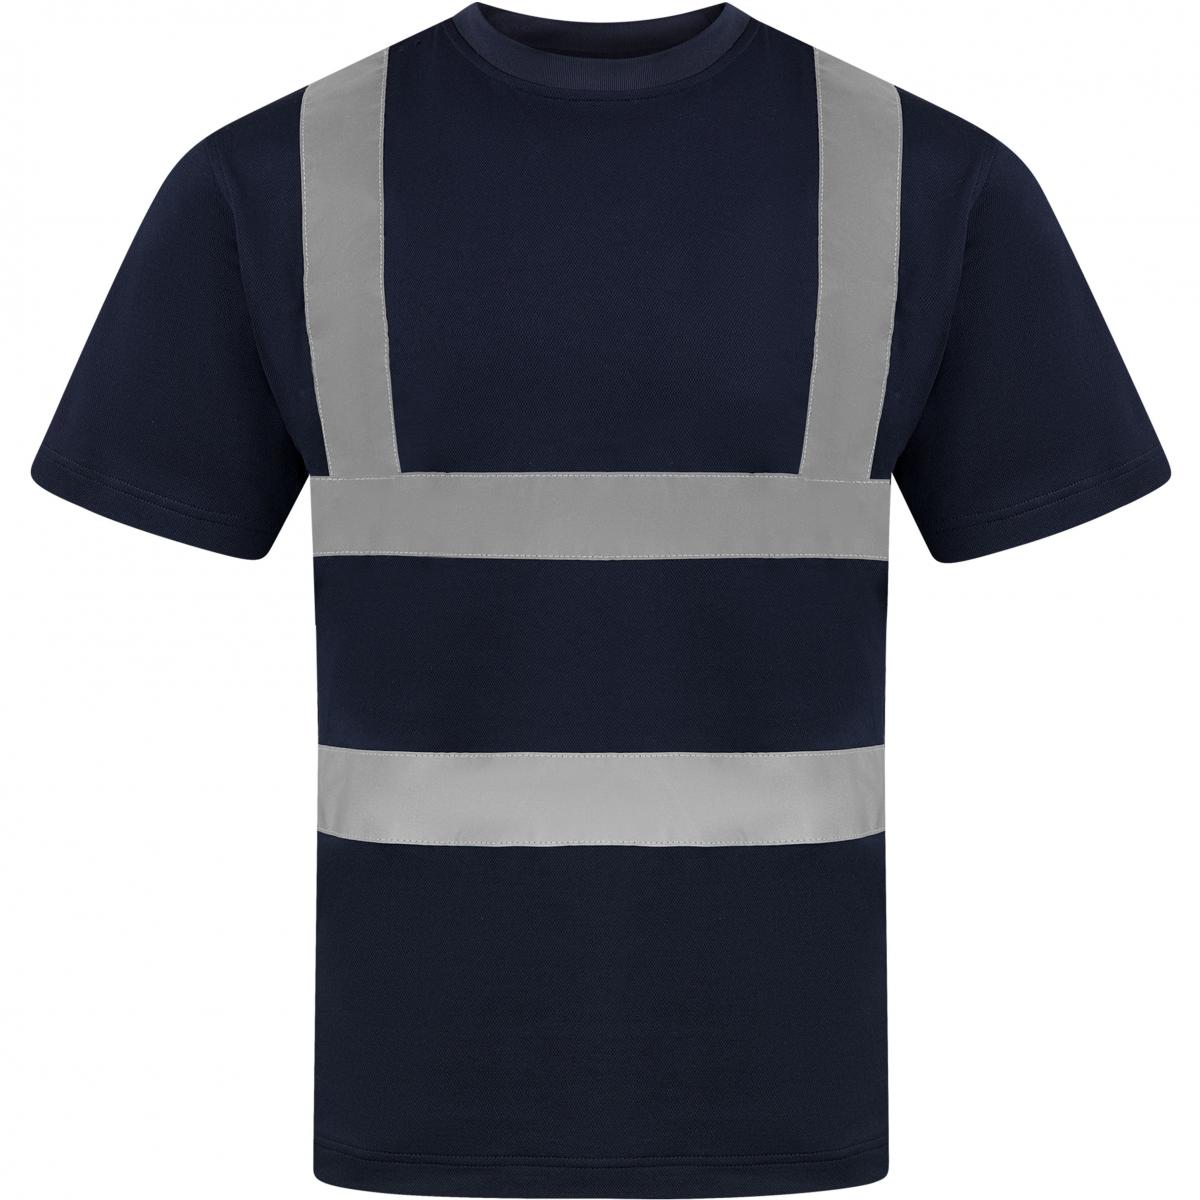 Hersteller: Korntex Herstellernummer: KXPCSHIRT Artikelbezeichnung: Herren Shirt Blended fabric T-Shirt, EN ISO 20471:2013 Farbe: Navy